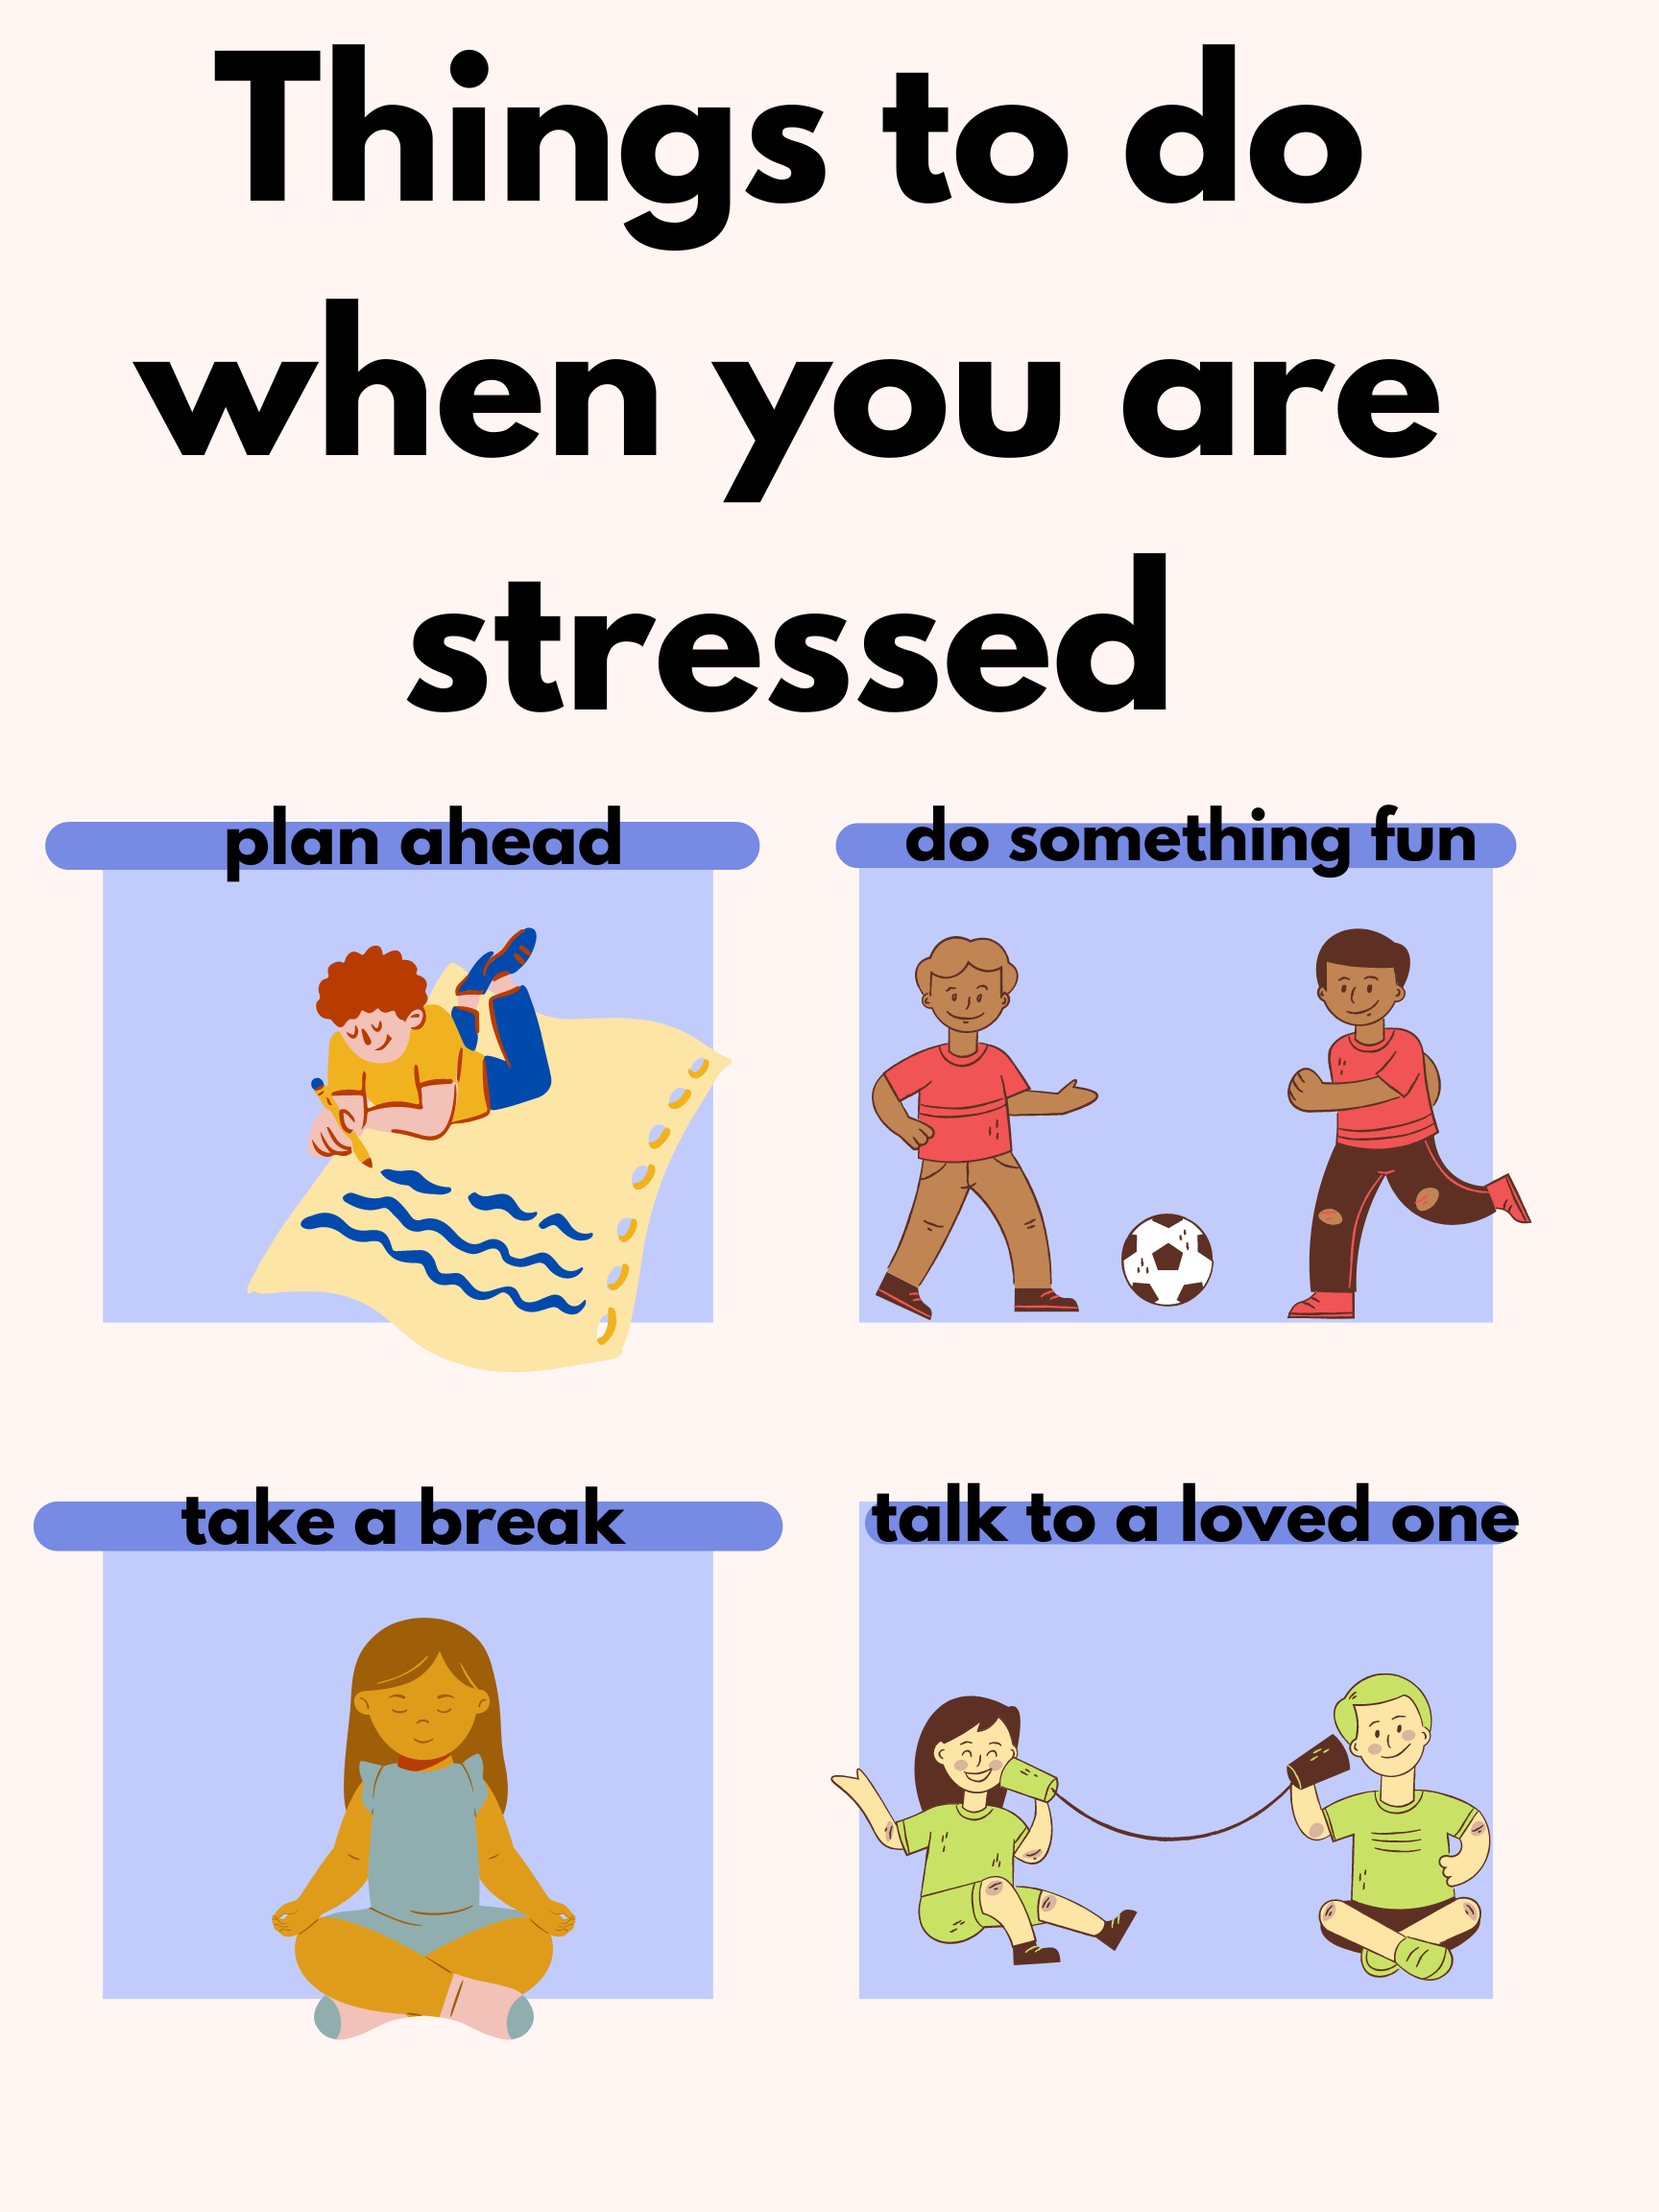 Stress Poster